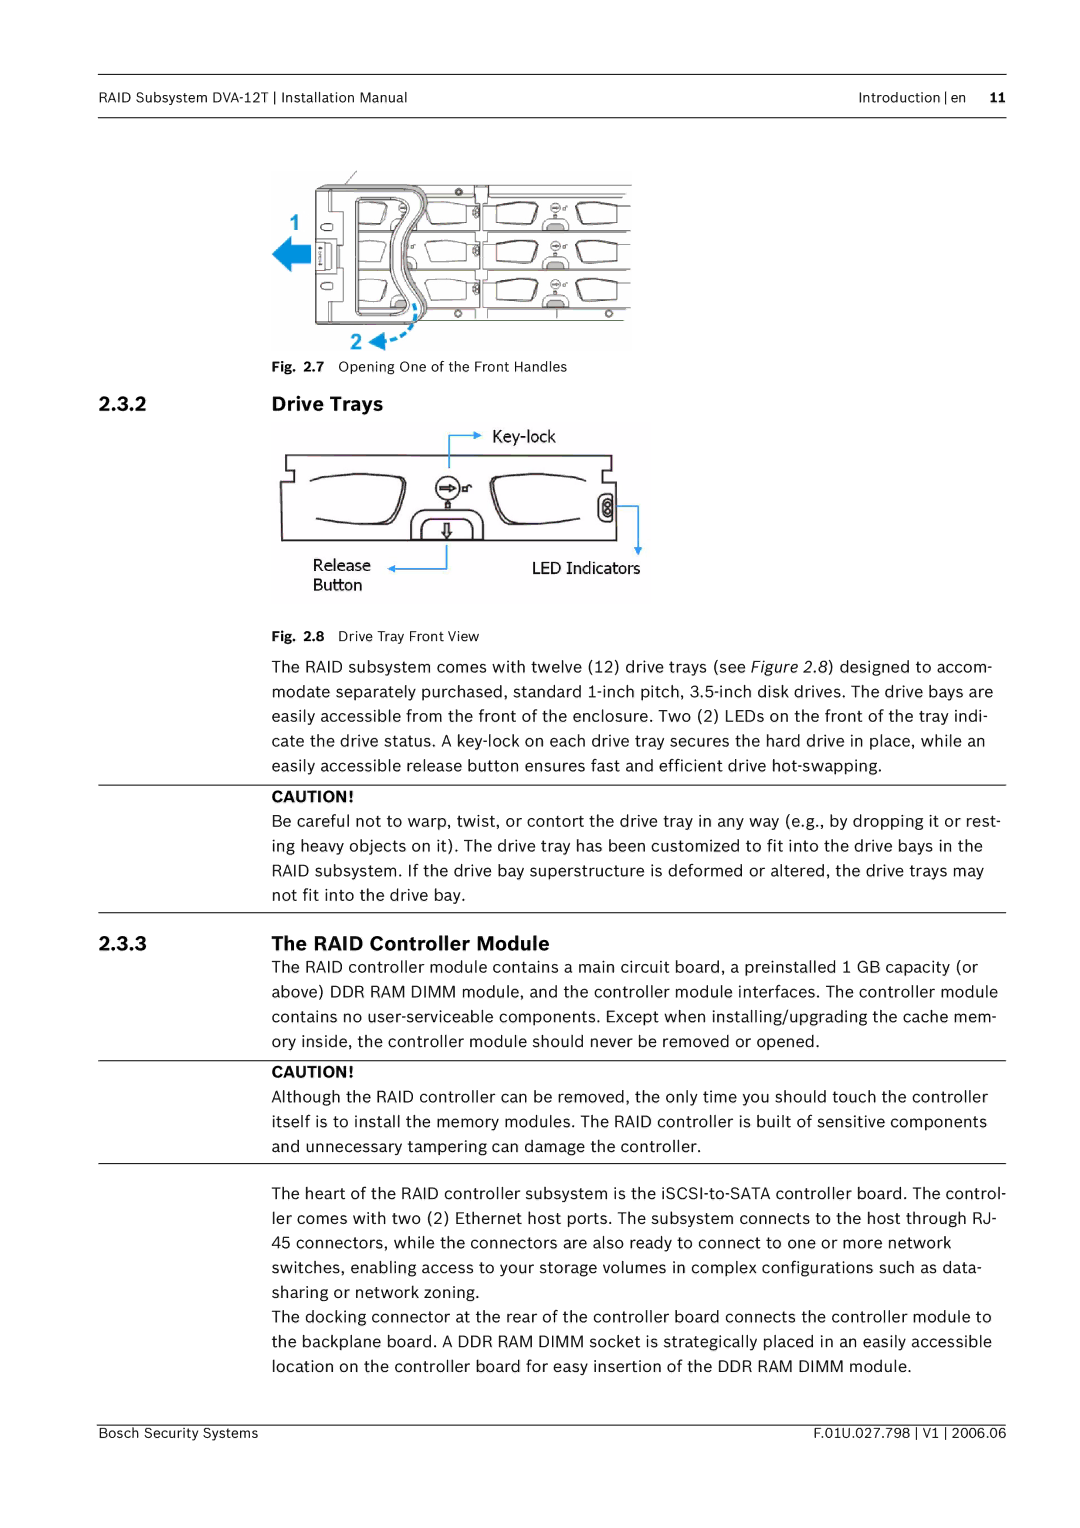 Bosch Appliances DVA-12T installation manual Drive Trays, RAID Controller Module 